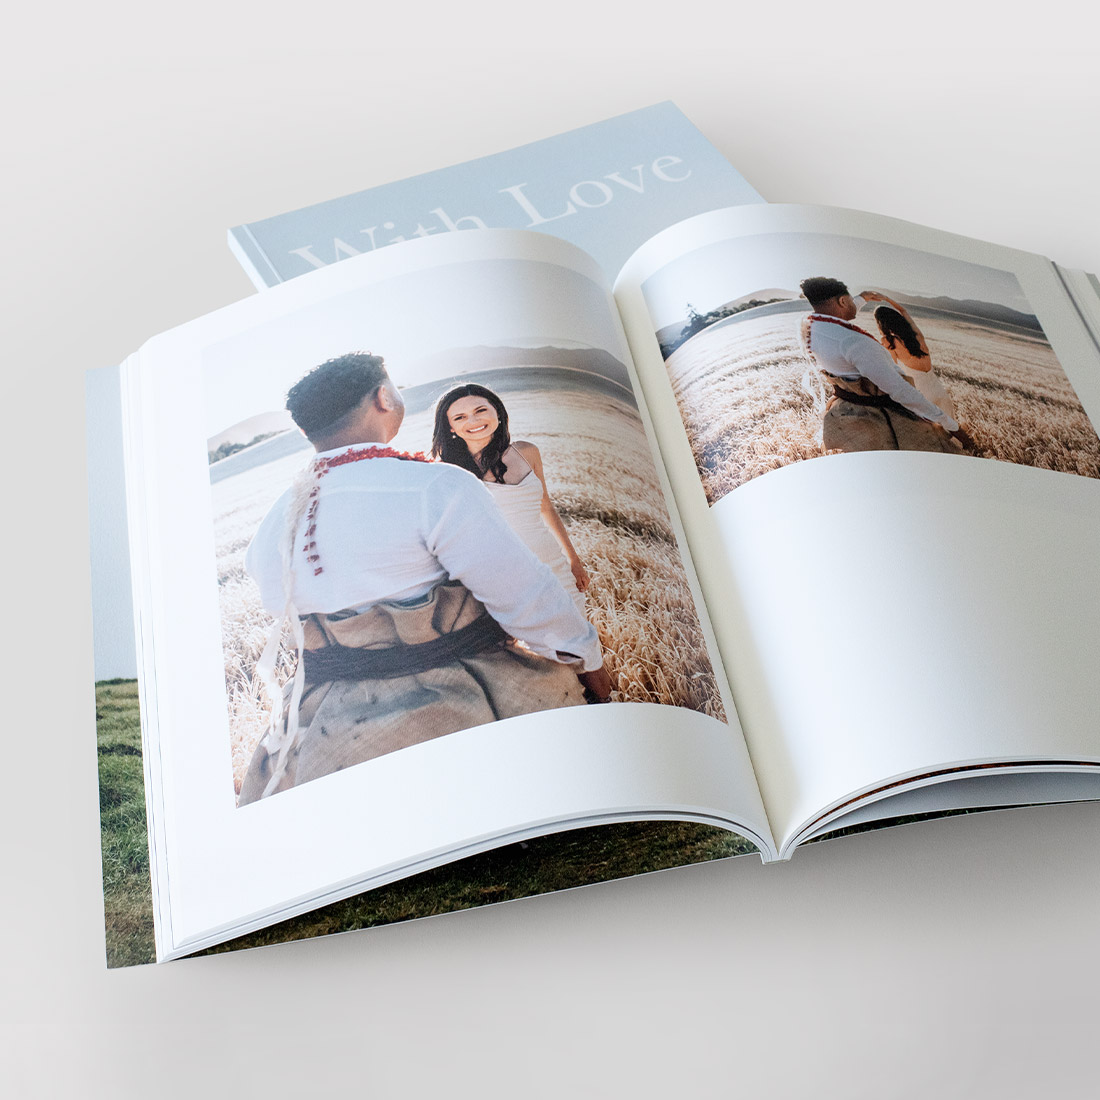 Open magazine showing spread of wedding photos